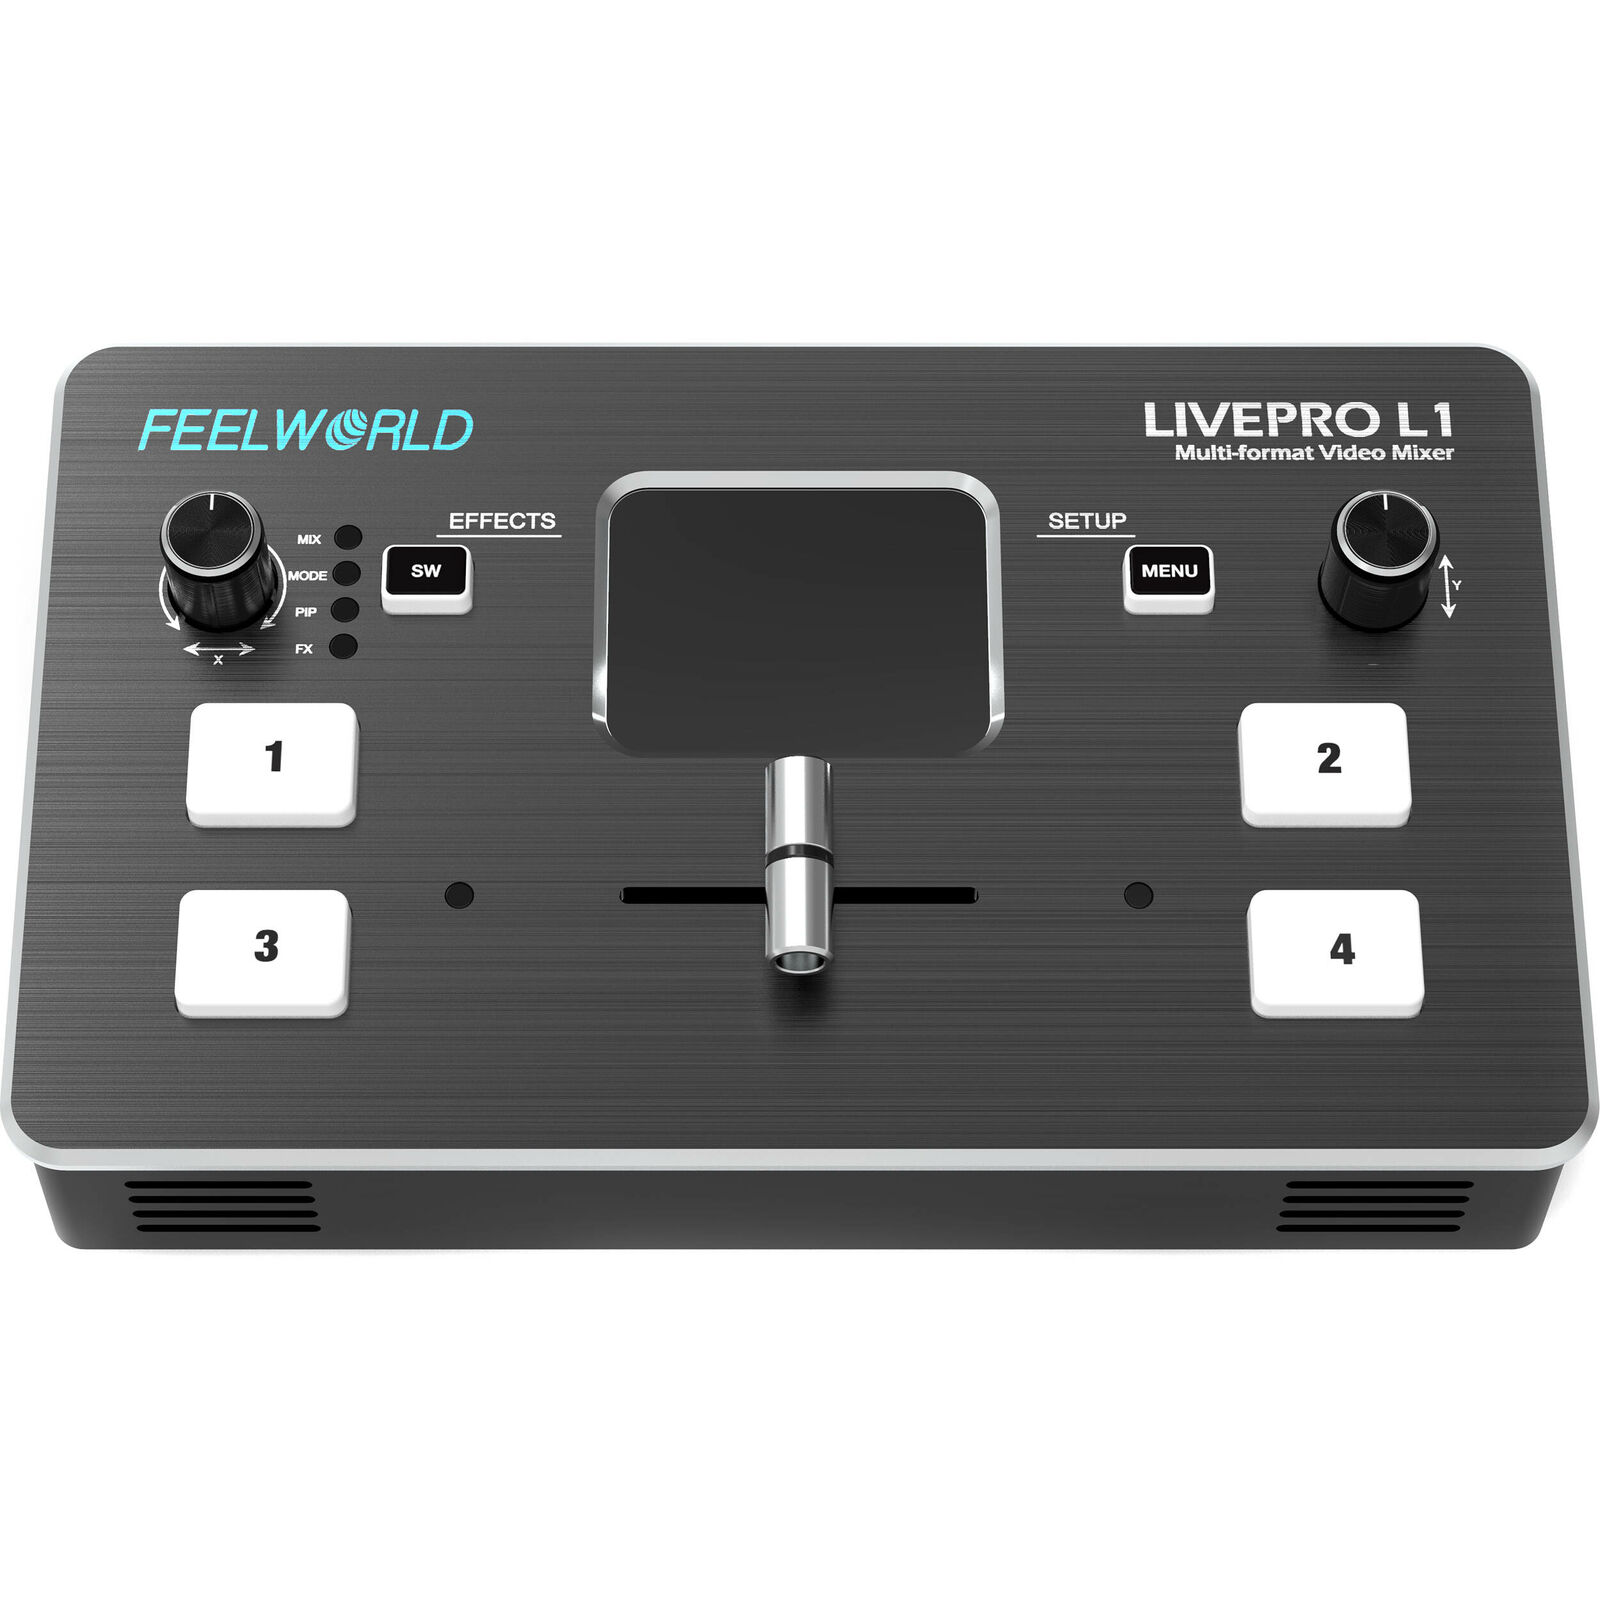 Feelworld Livepro L1 Video Mixer